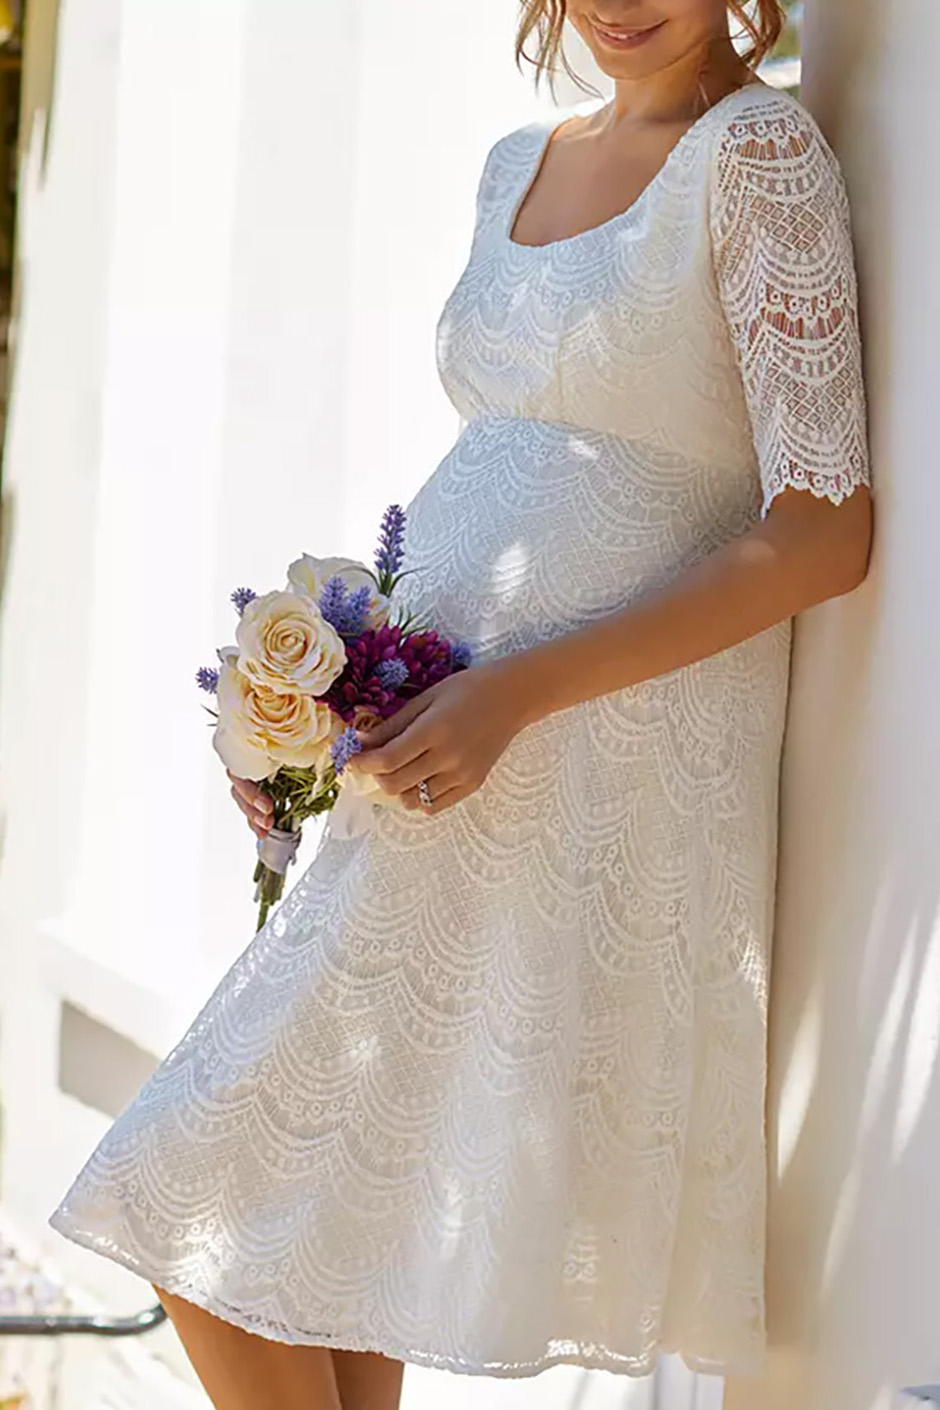 tiffany-rose-verona-maternity-lace-short-wedding-dress.jpg